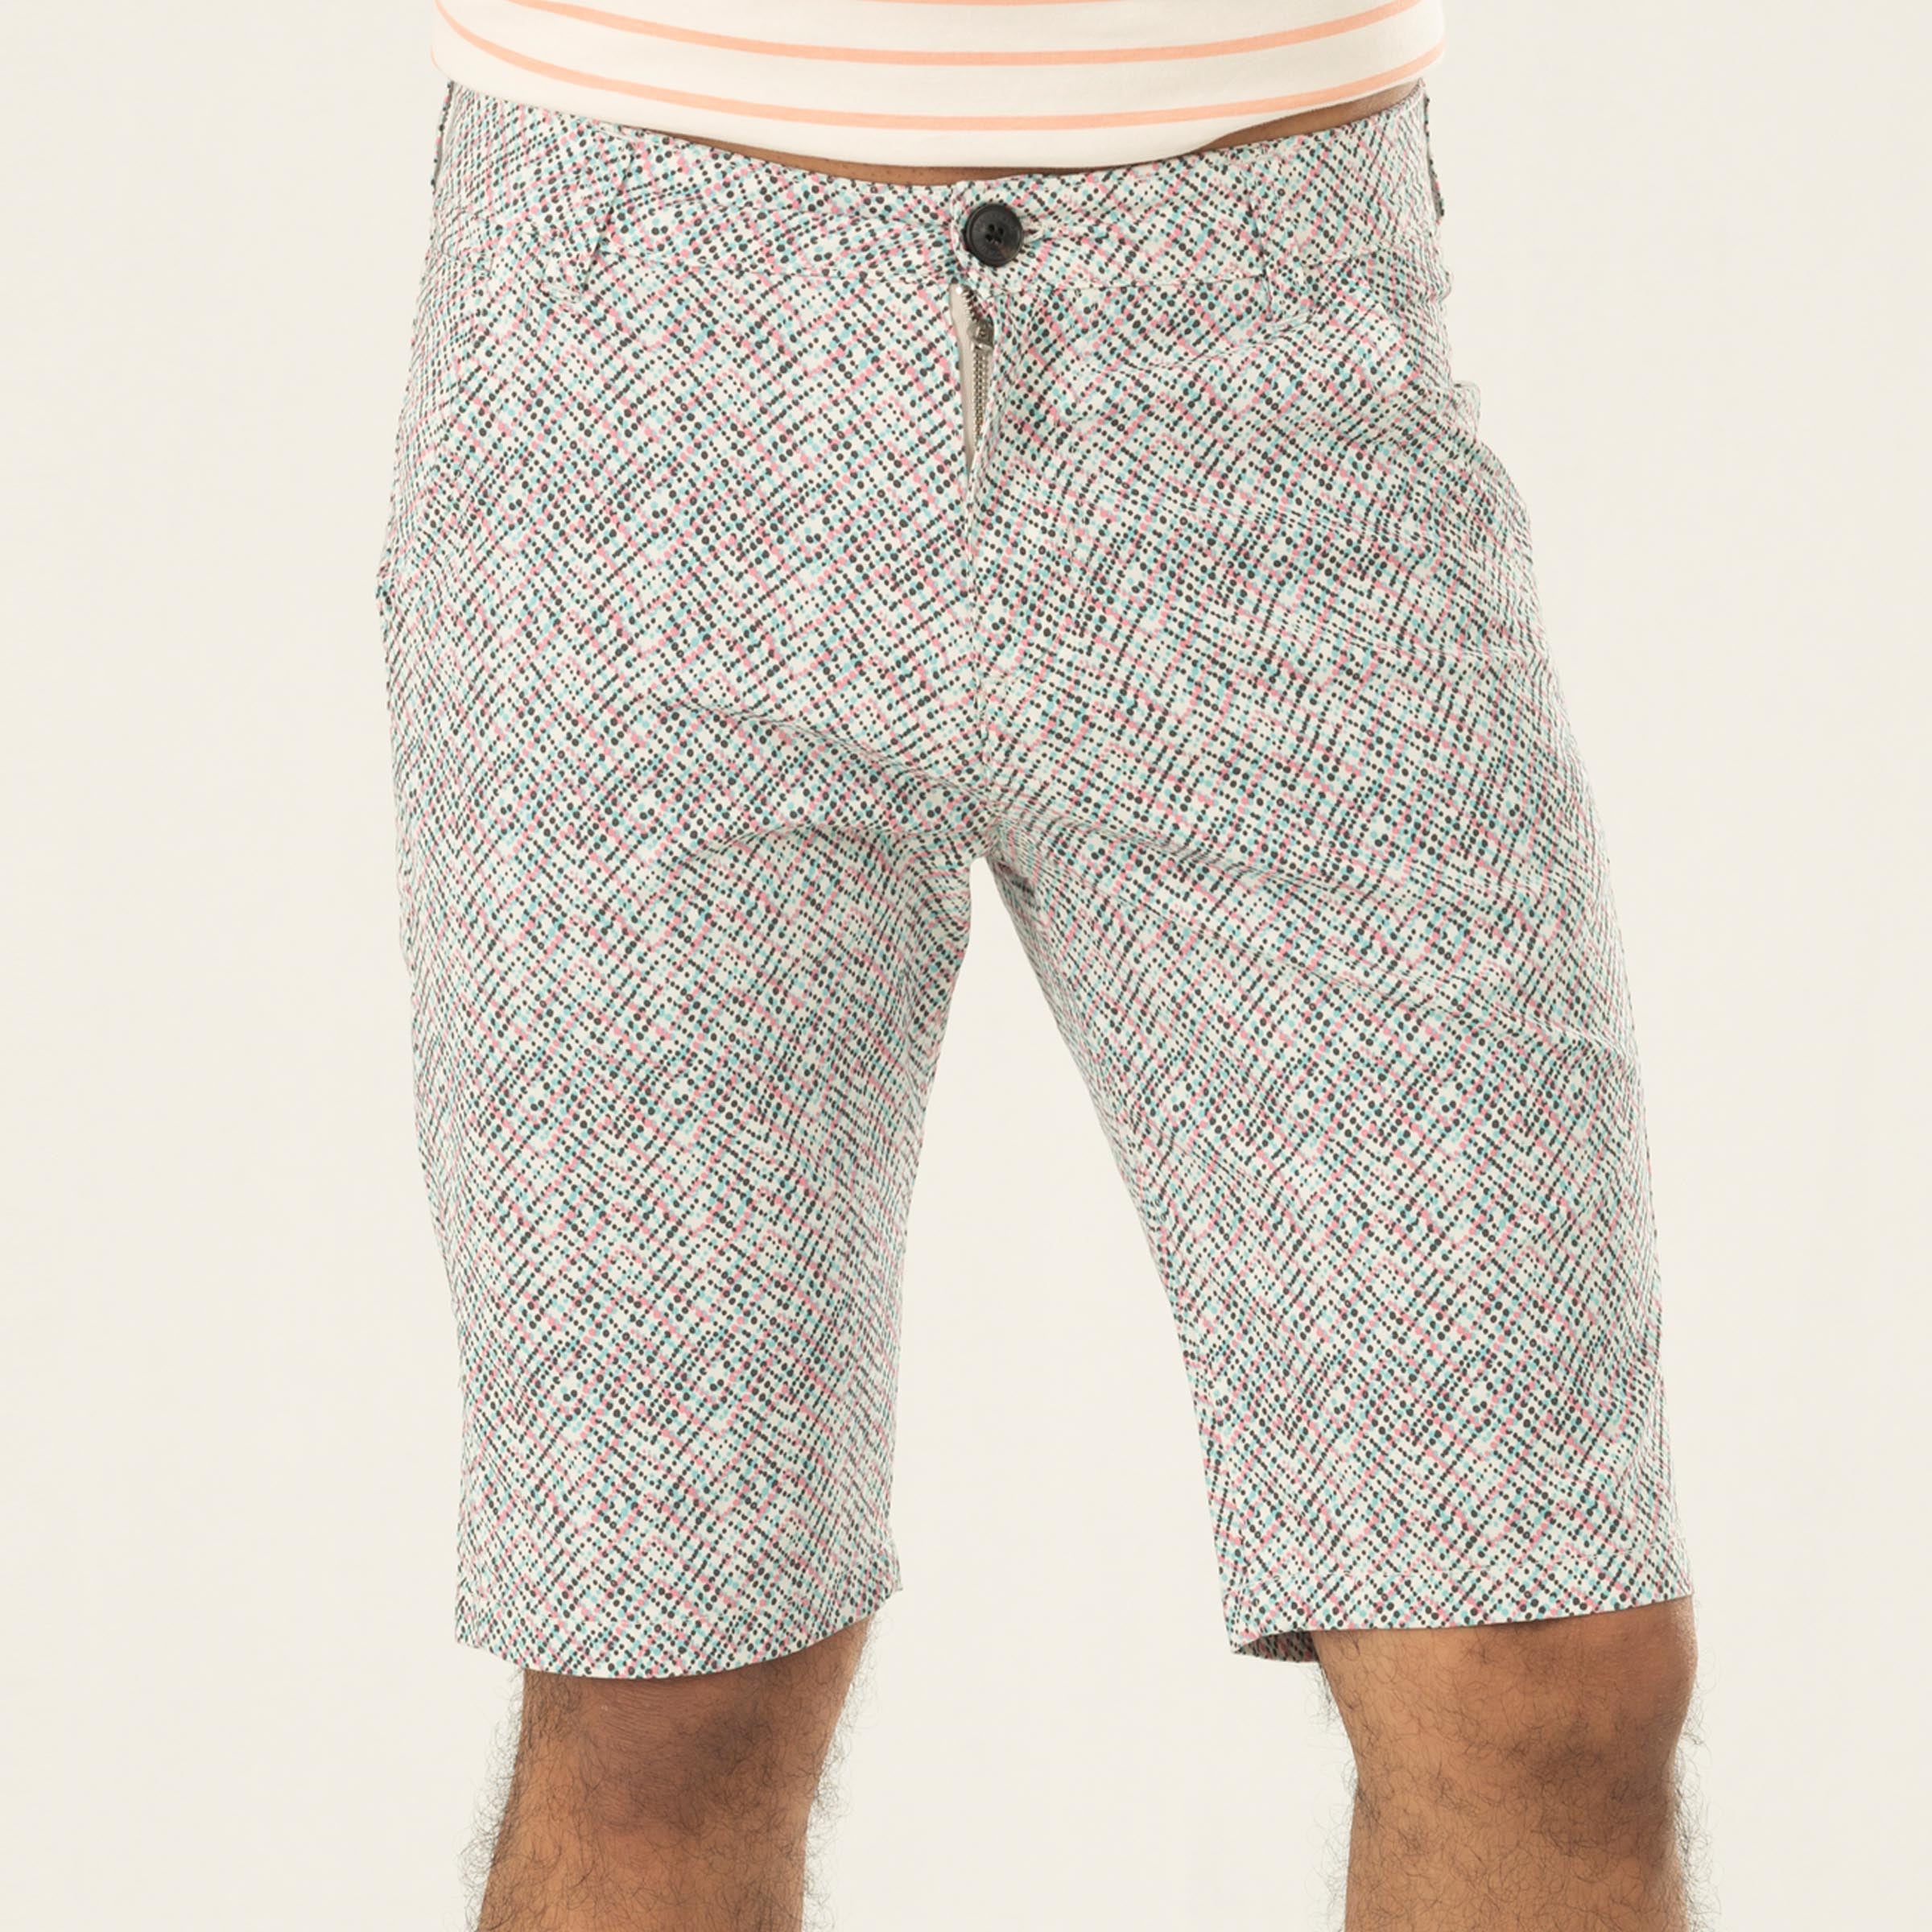 Men's Comfort Shorts - Multi